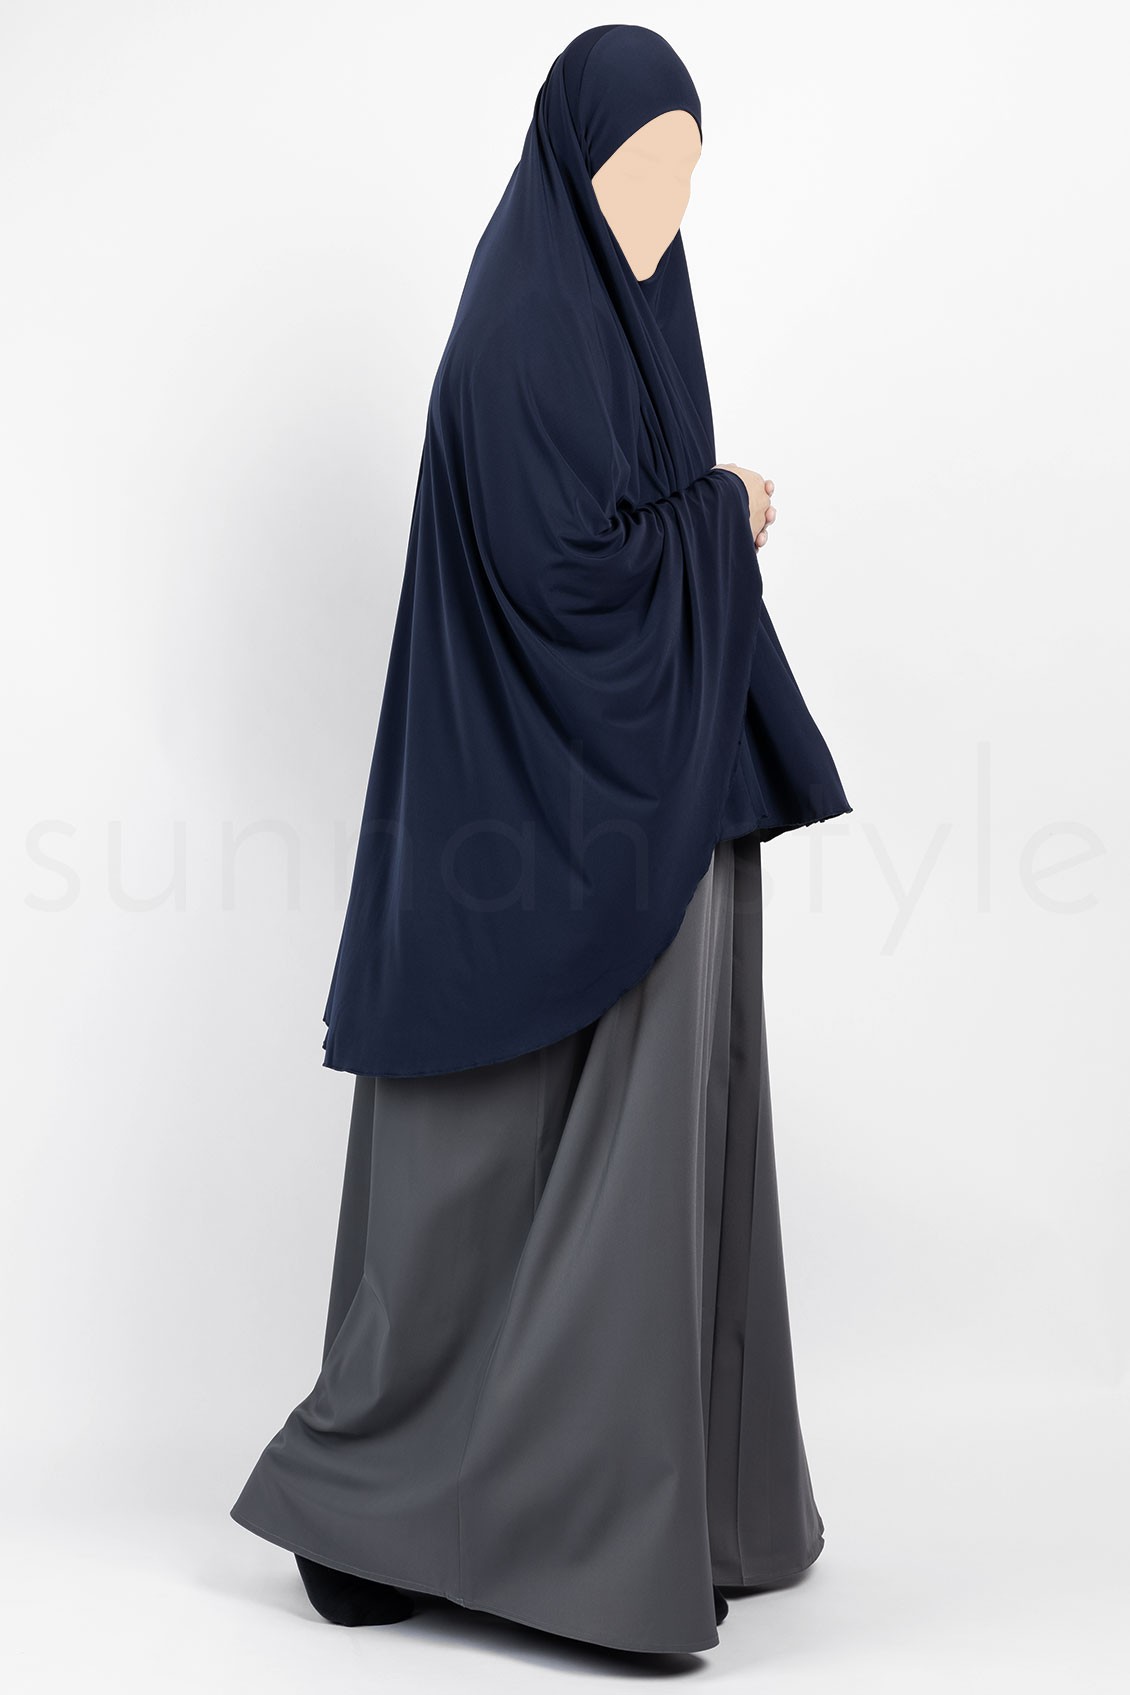 Sunnah Style Jersey Khimar Thigh Length Navy Blue